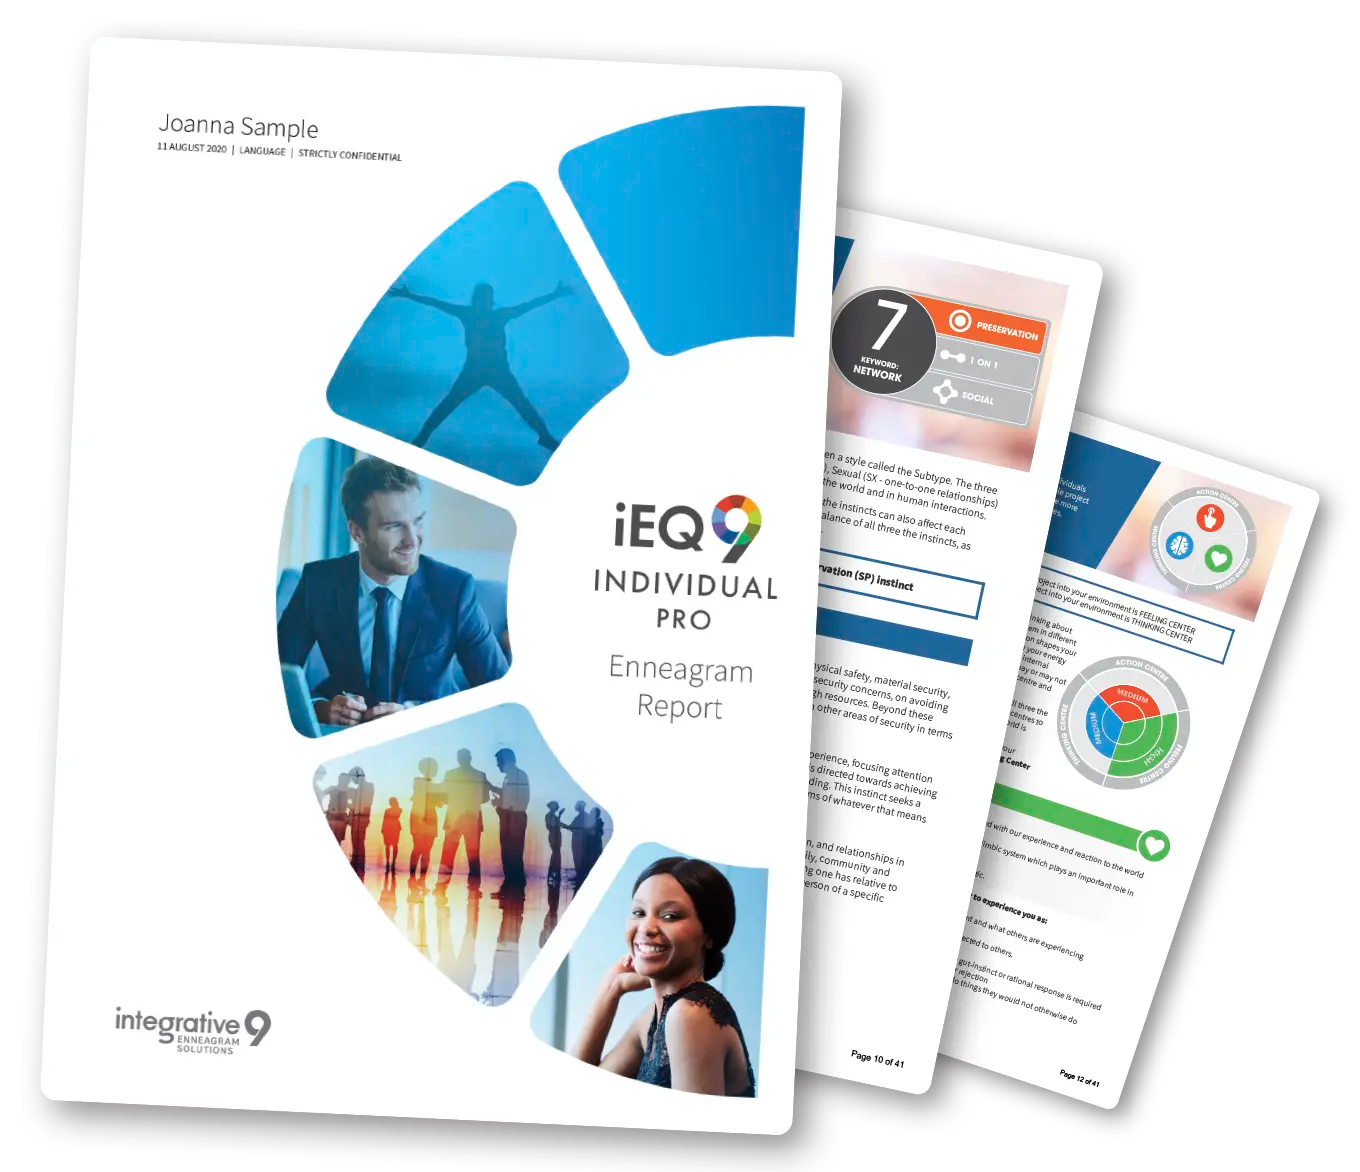 iEQ9 Enneagram Report: Professional